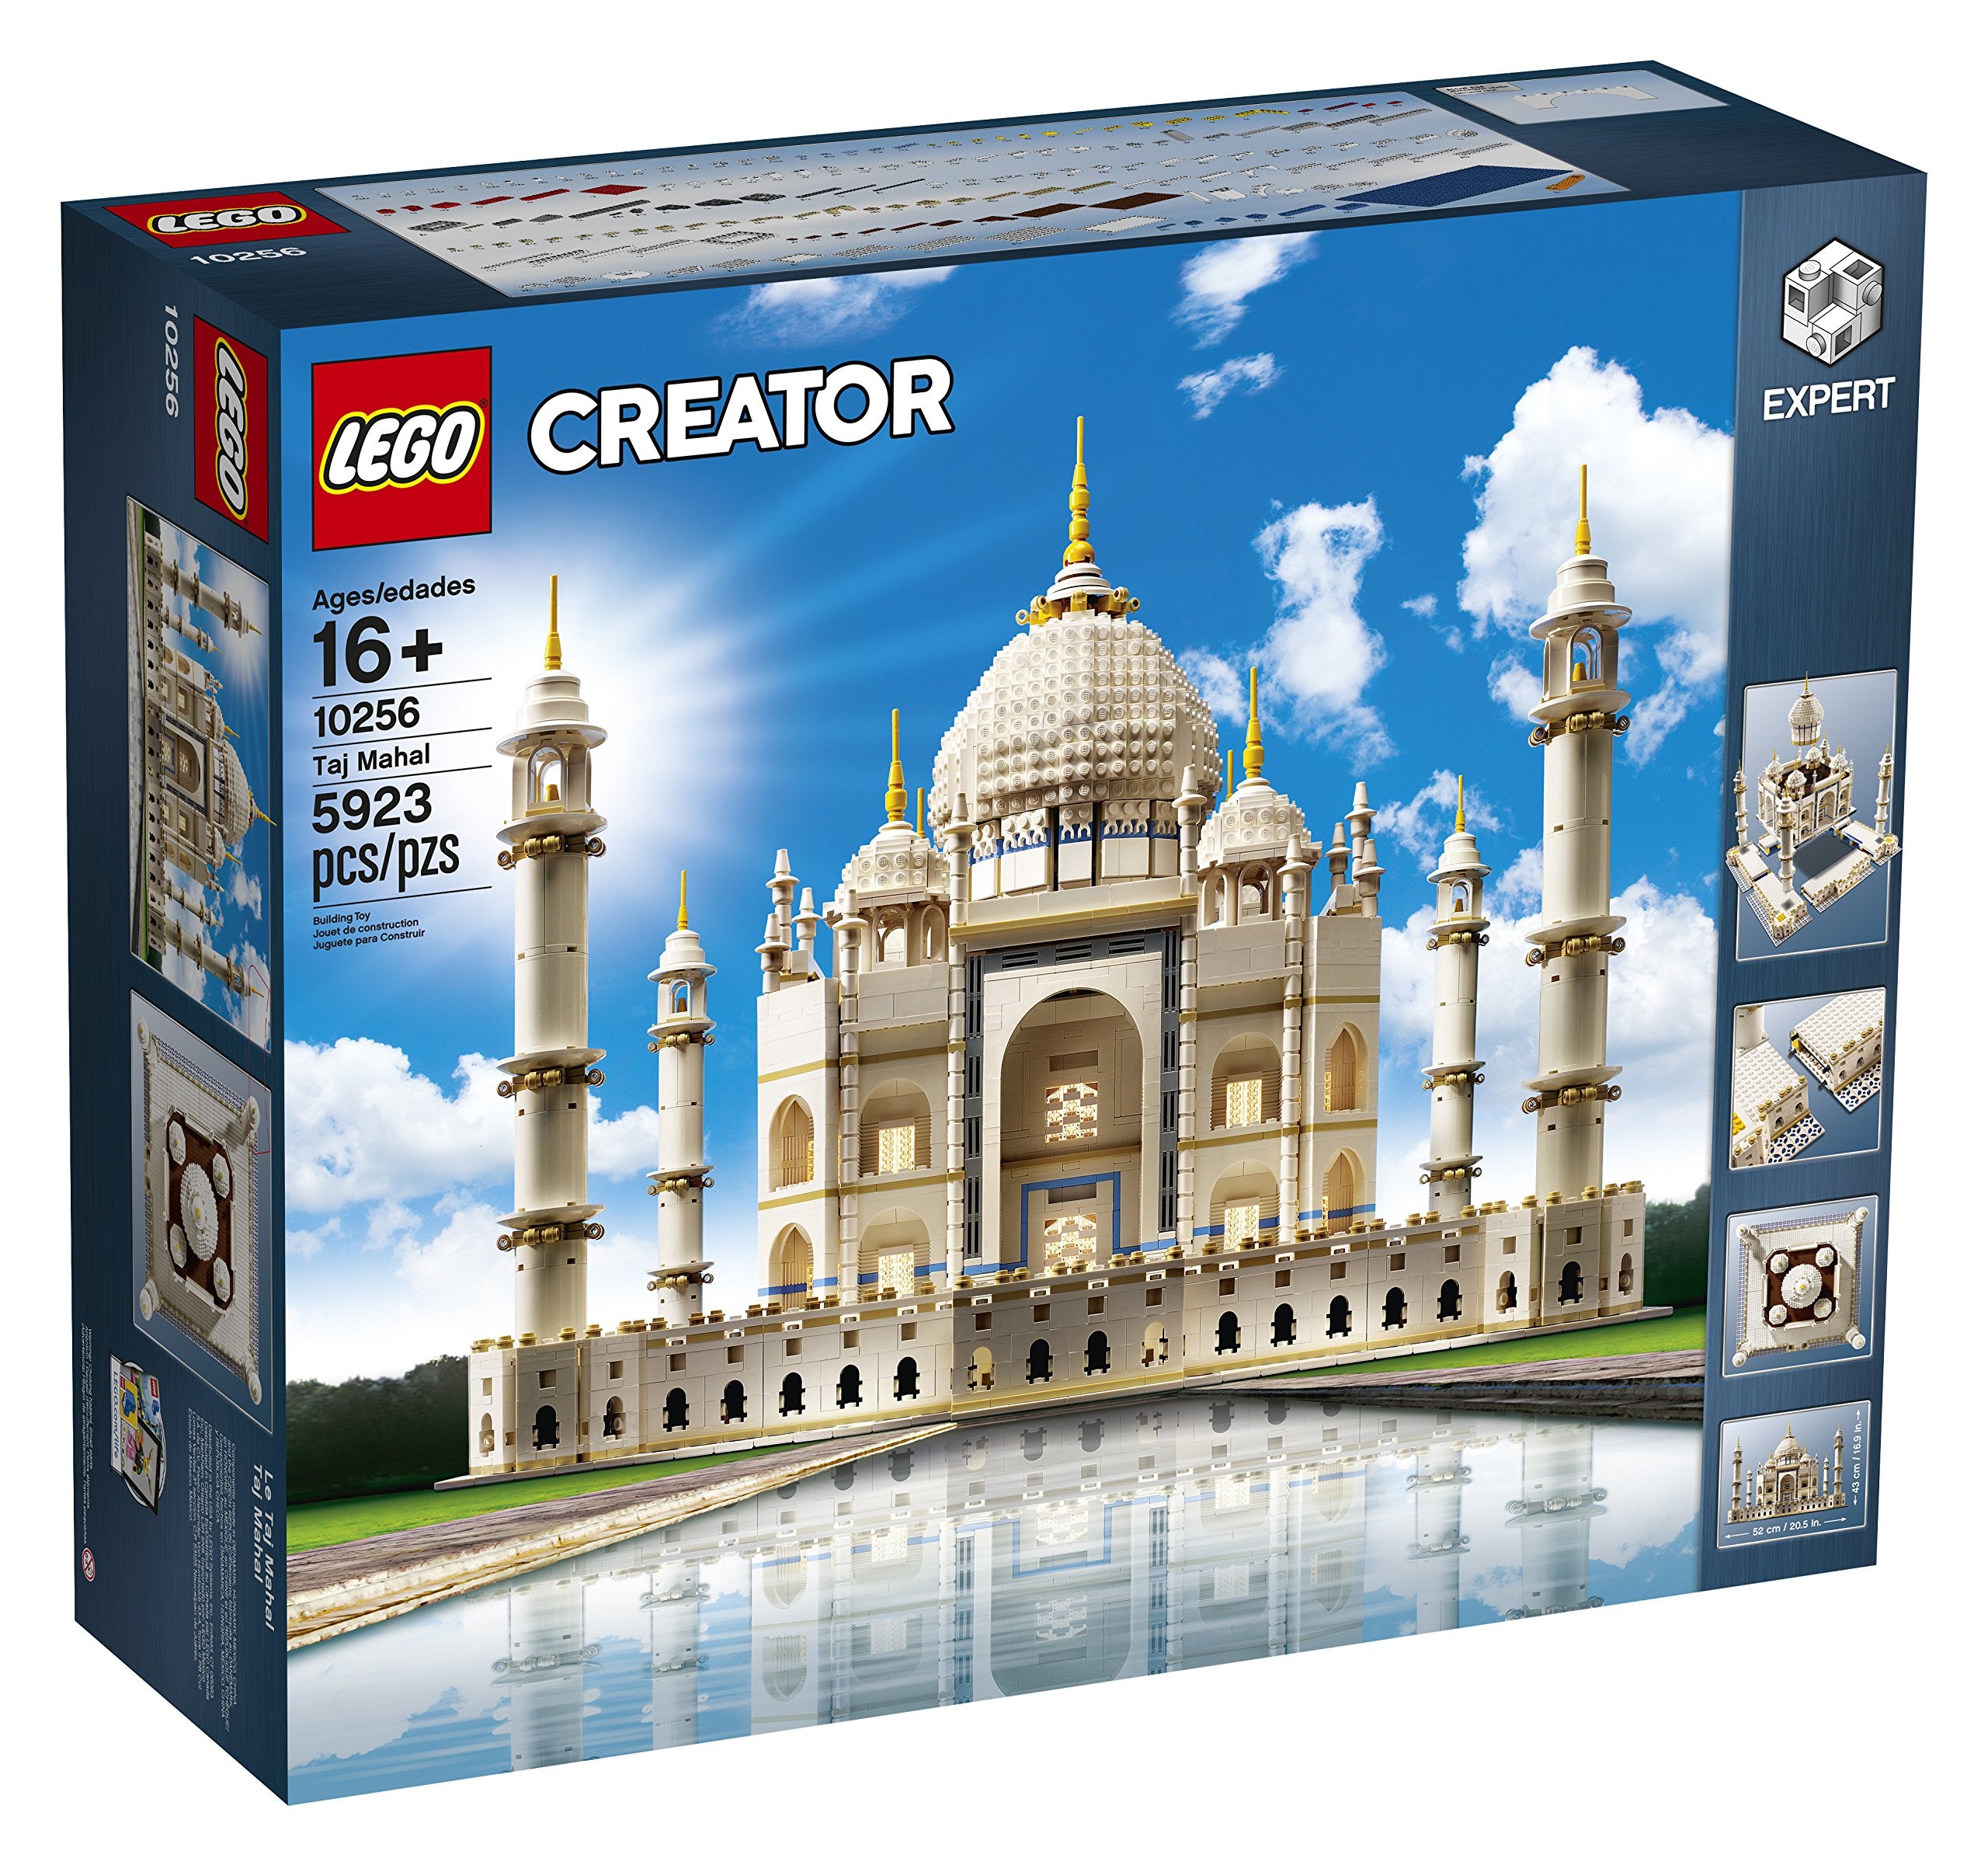 LEGO Creator Expert Taj Mahal 10256 Building Kit (5923 Piece